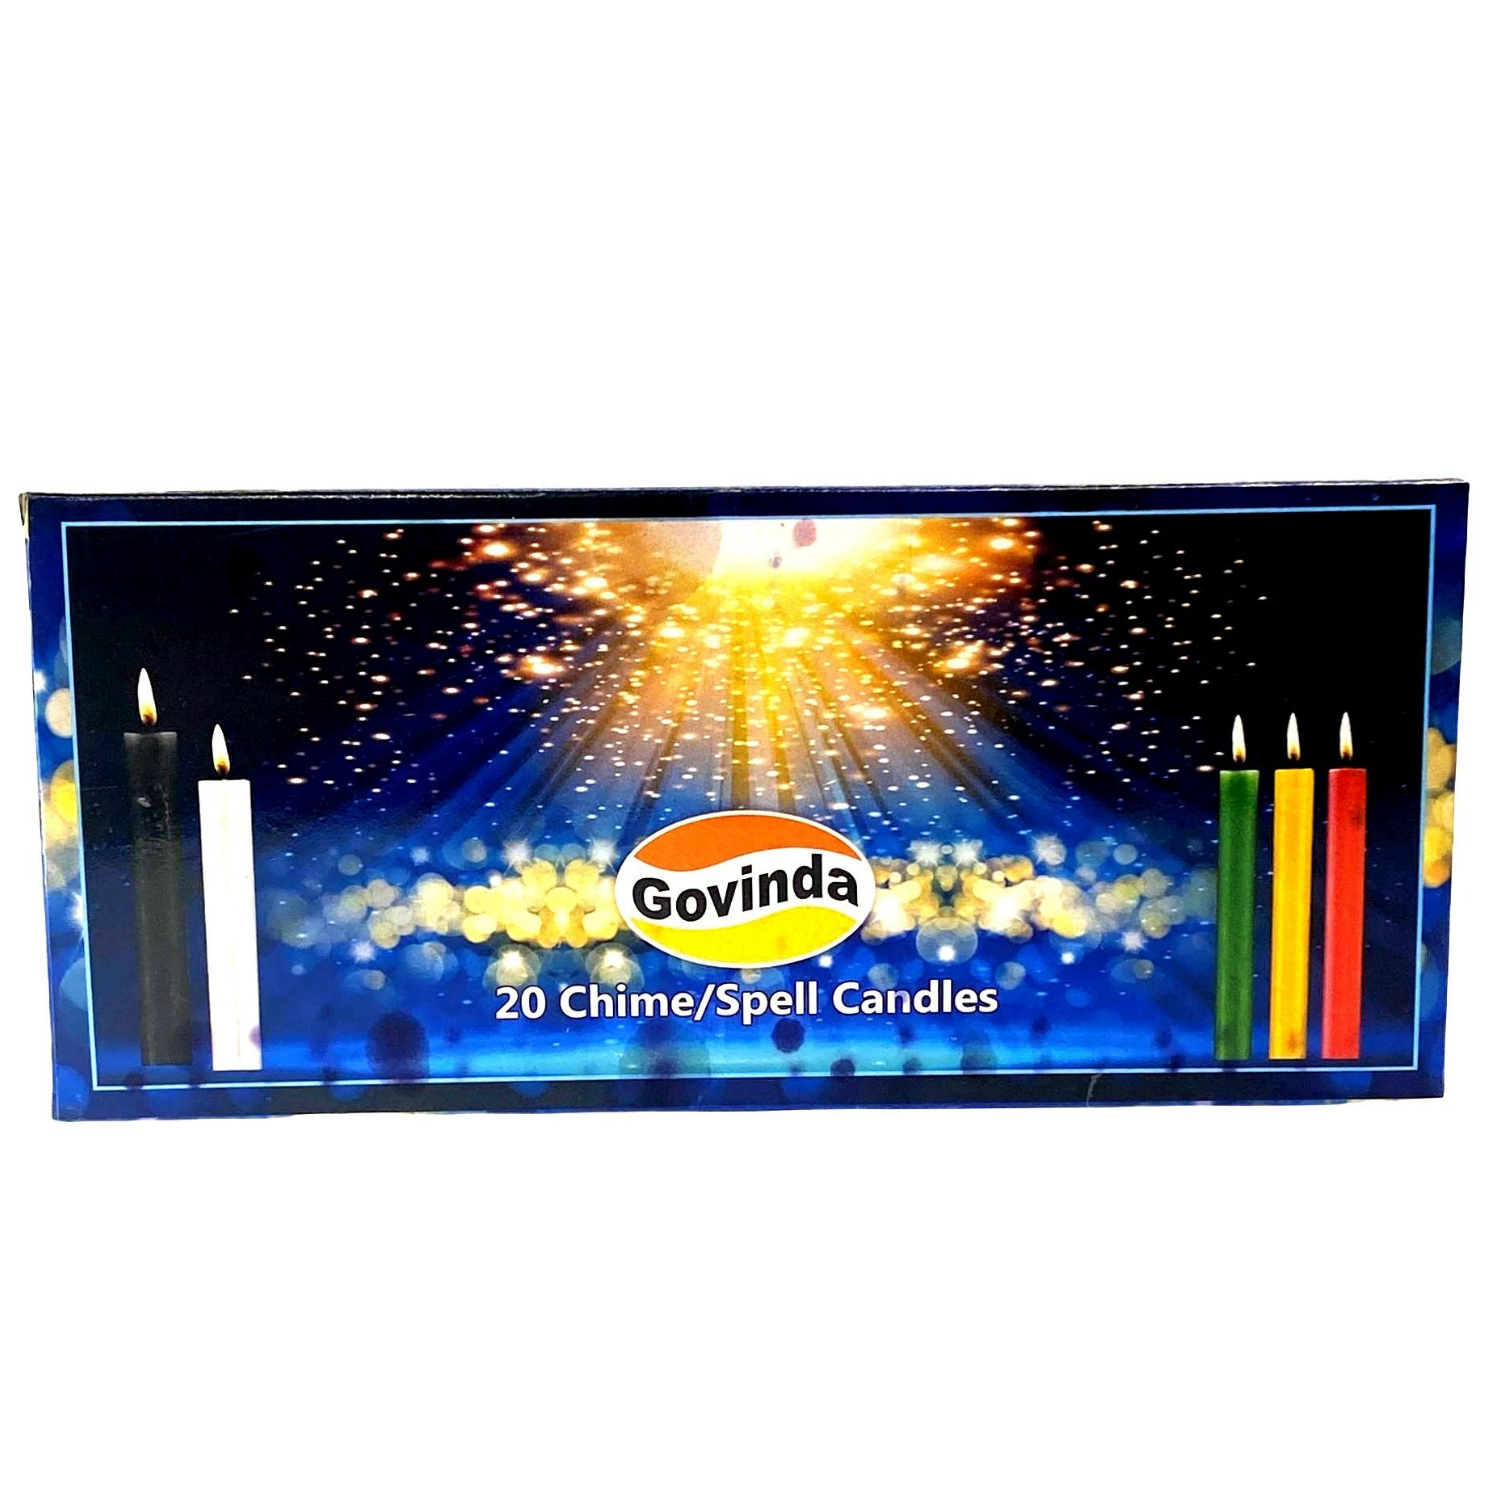 Govinda - 4 Inch Mini Ritual Chime Spell Candles - Black - Pack of 20